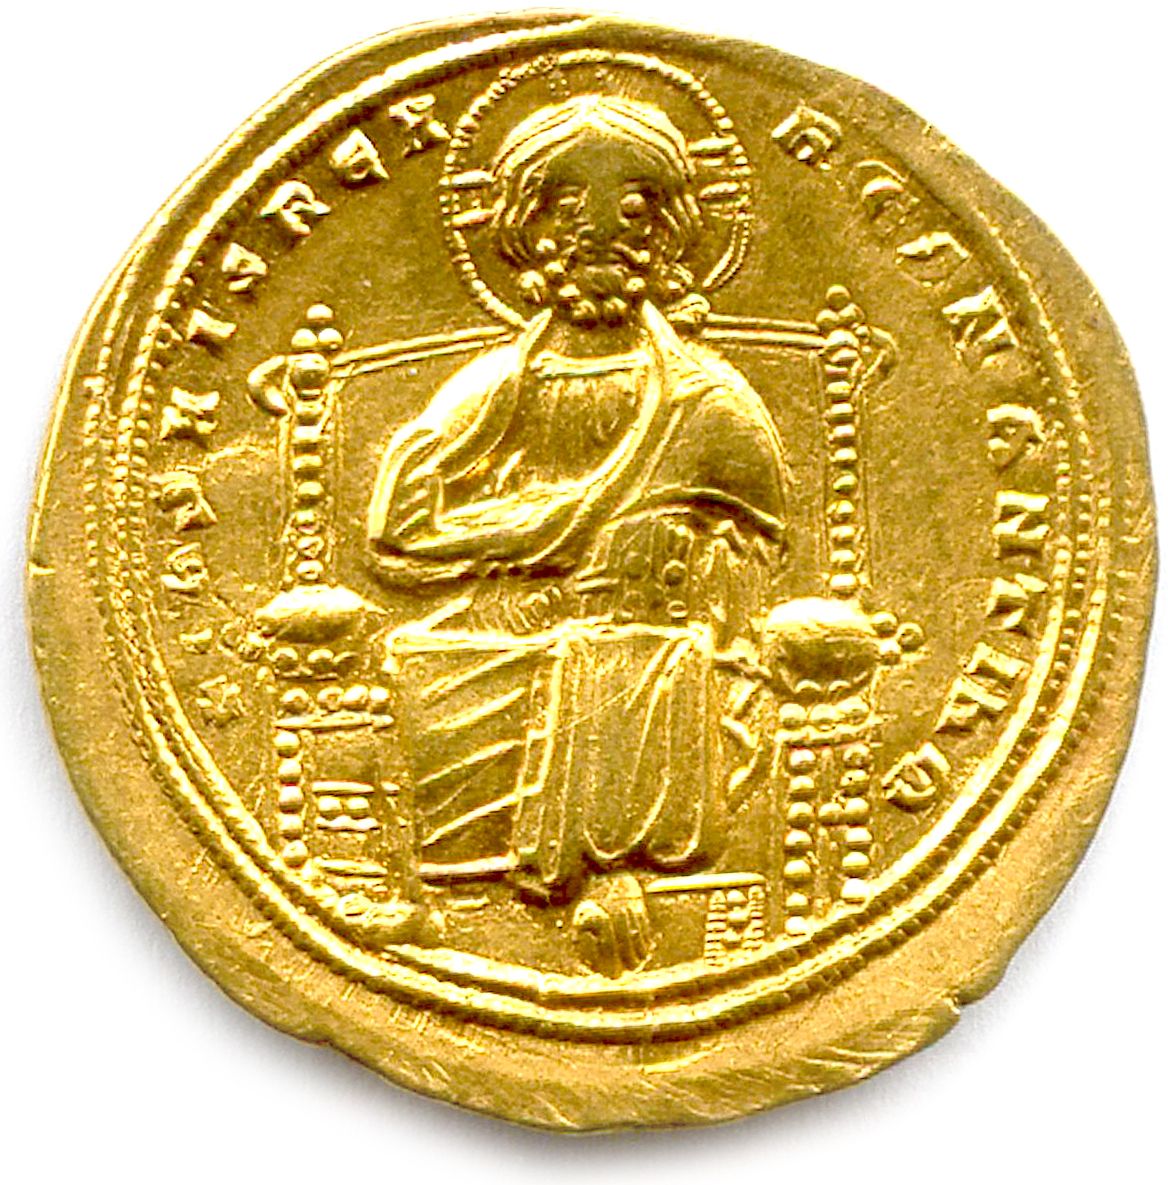 Null ROMANO III ARGYRA 12 de noviembre de 1028 - 11 de abril de 1034

IhS XIS RE&hellip;